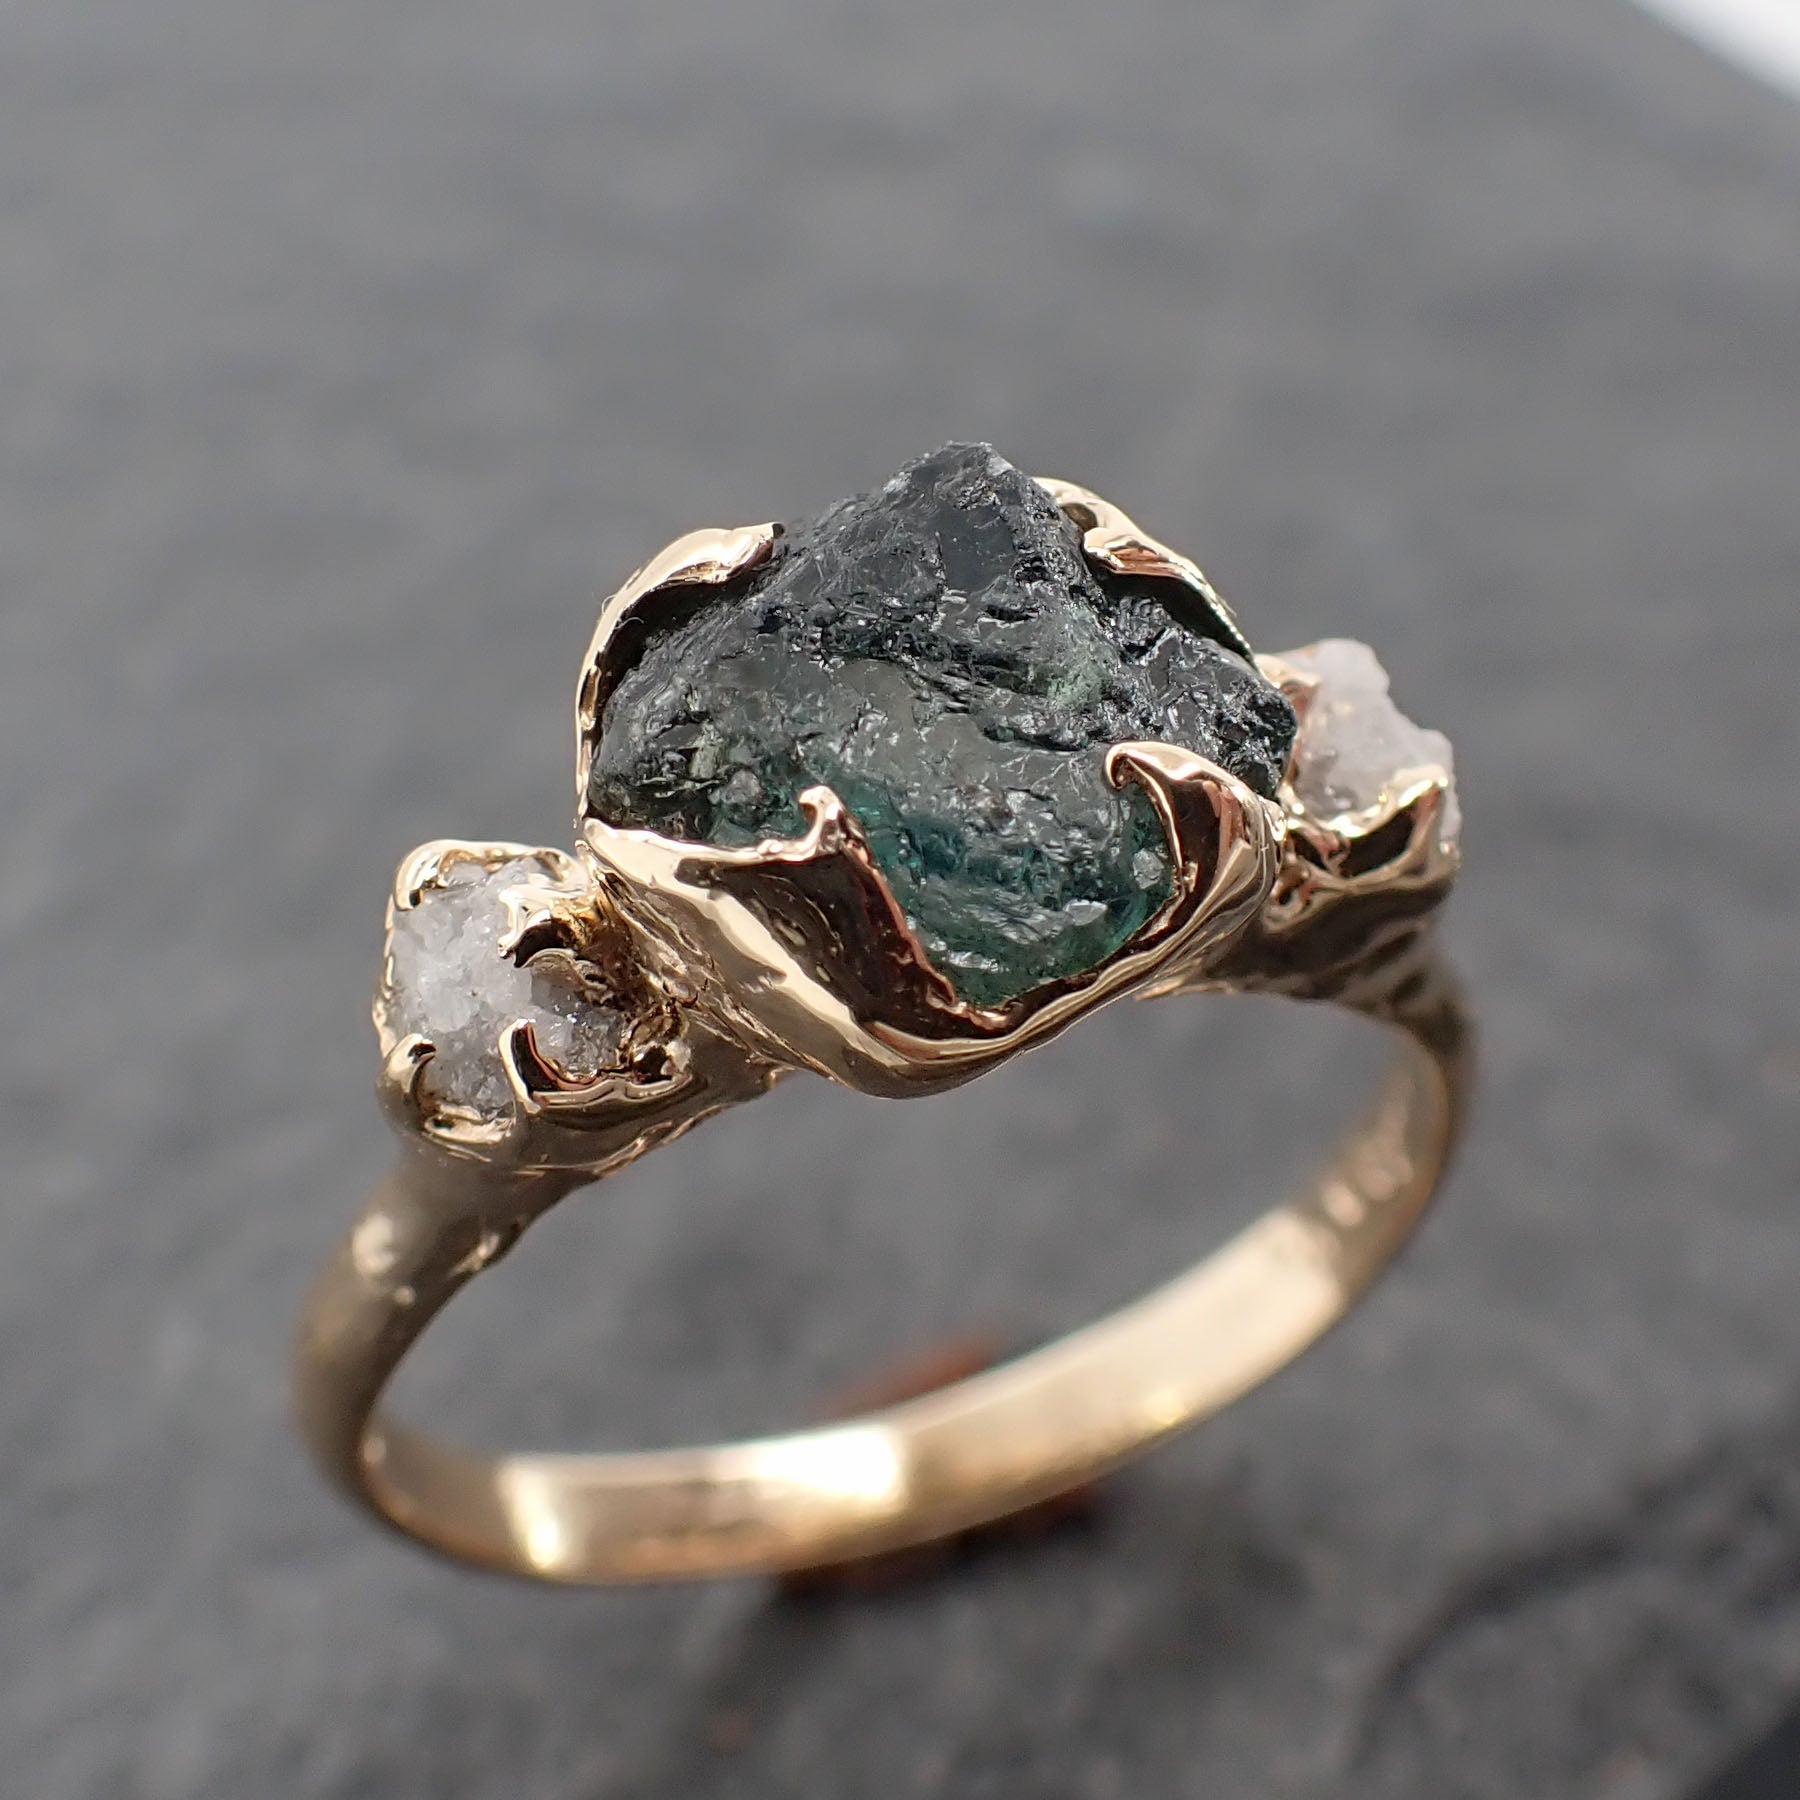 raw blue-green montana sapphire diamond 14k gold engagement wedding ring custom one of a kind gemstone multi stone ring 2413 Alternative Engagement